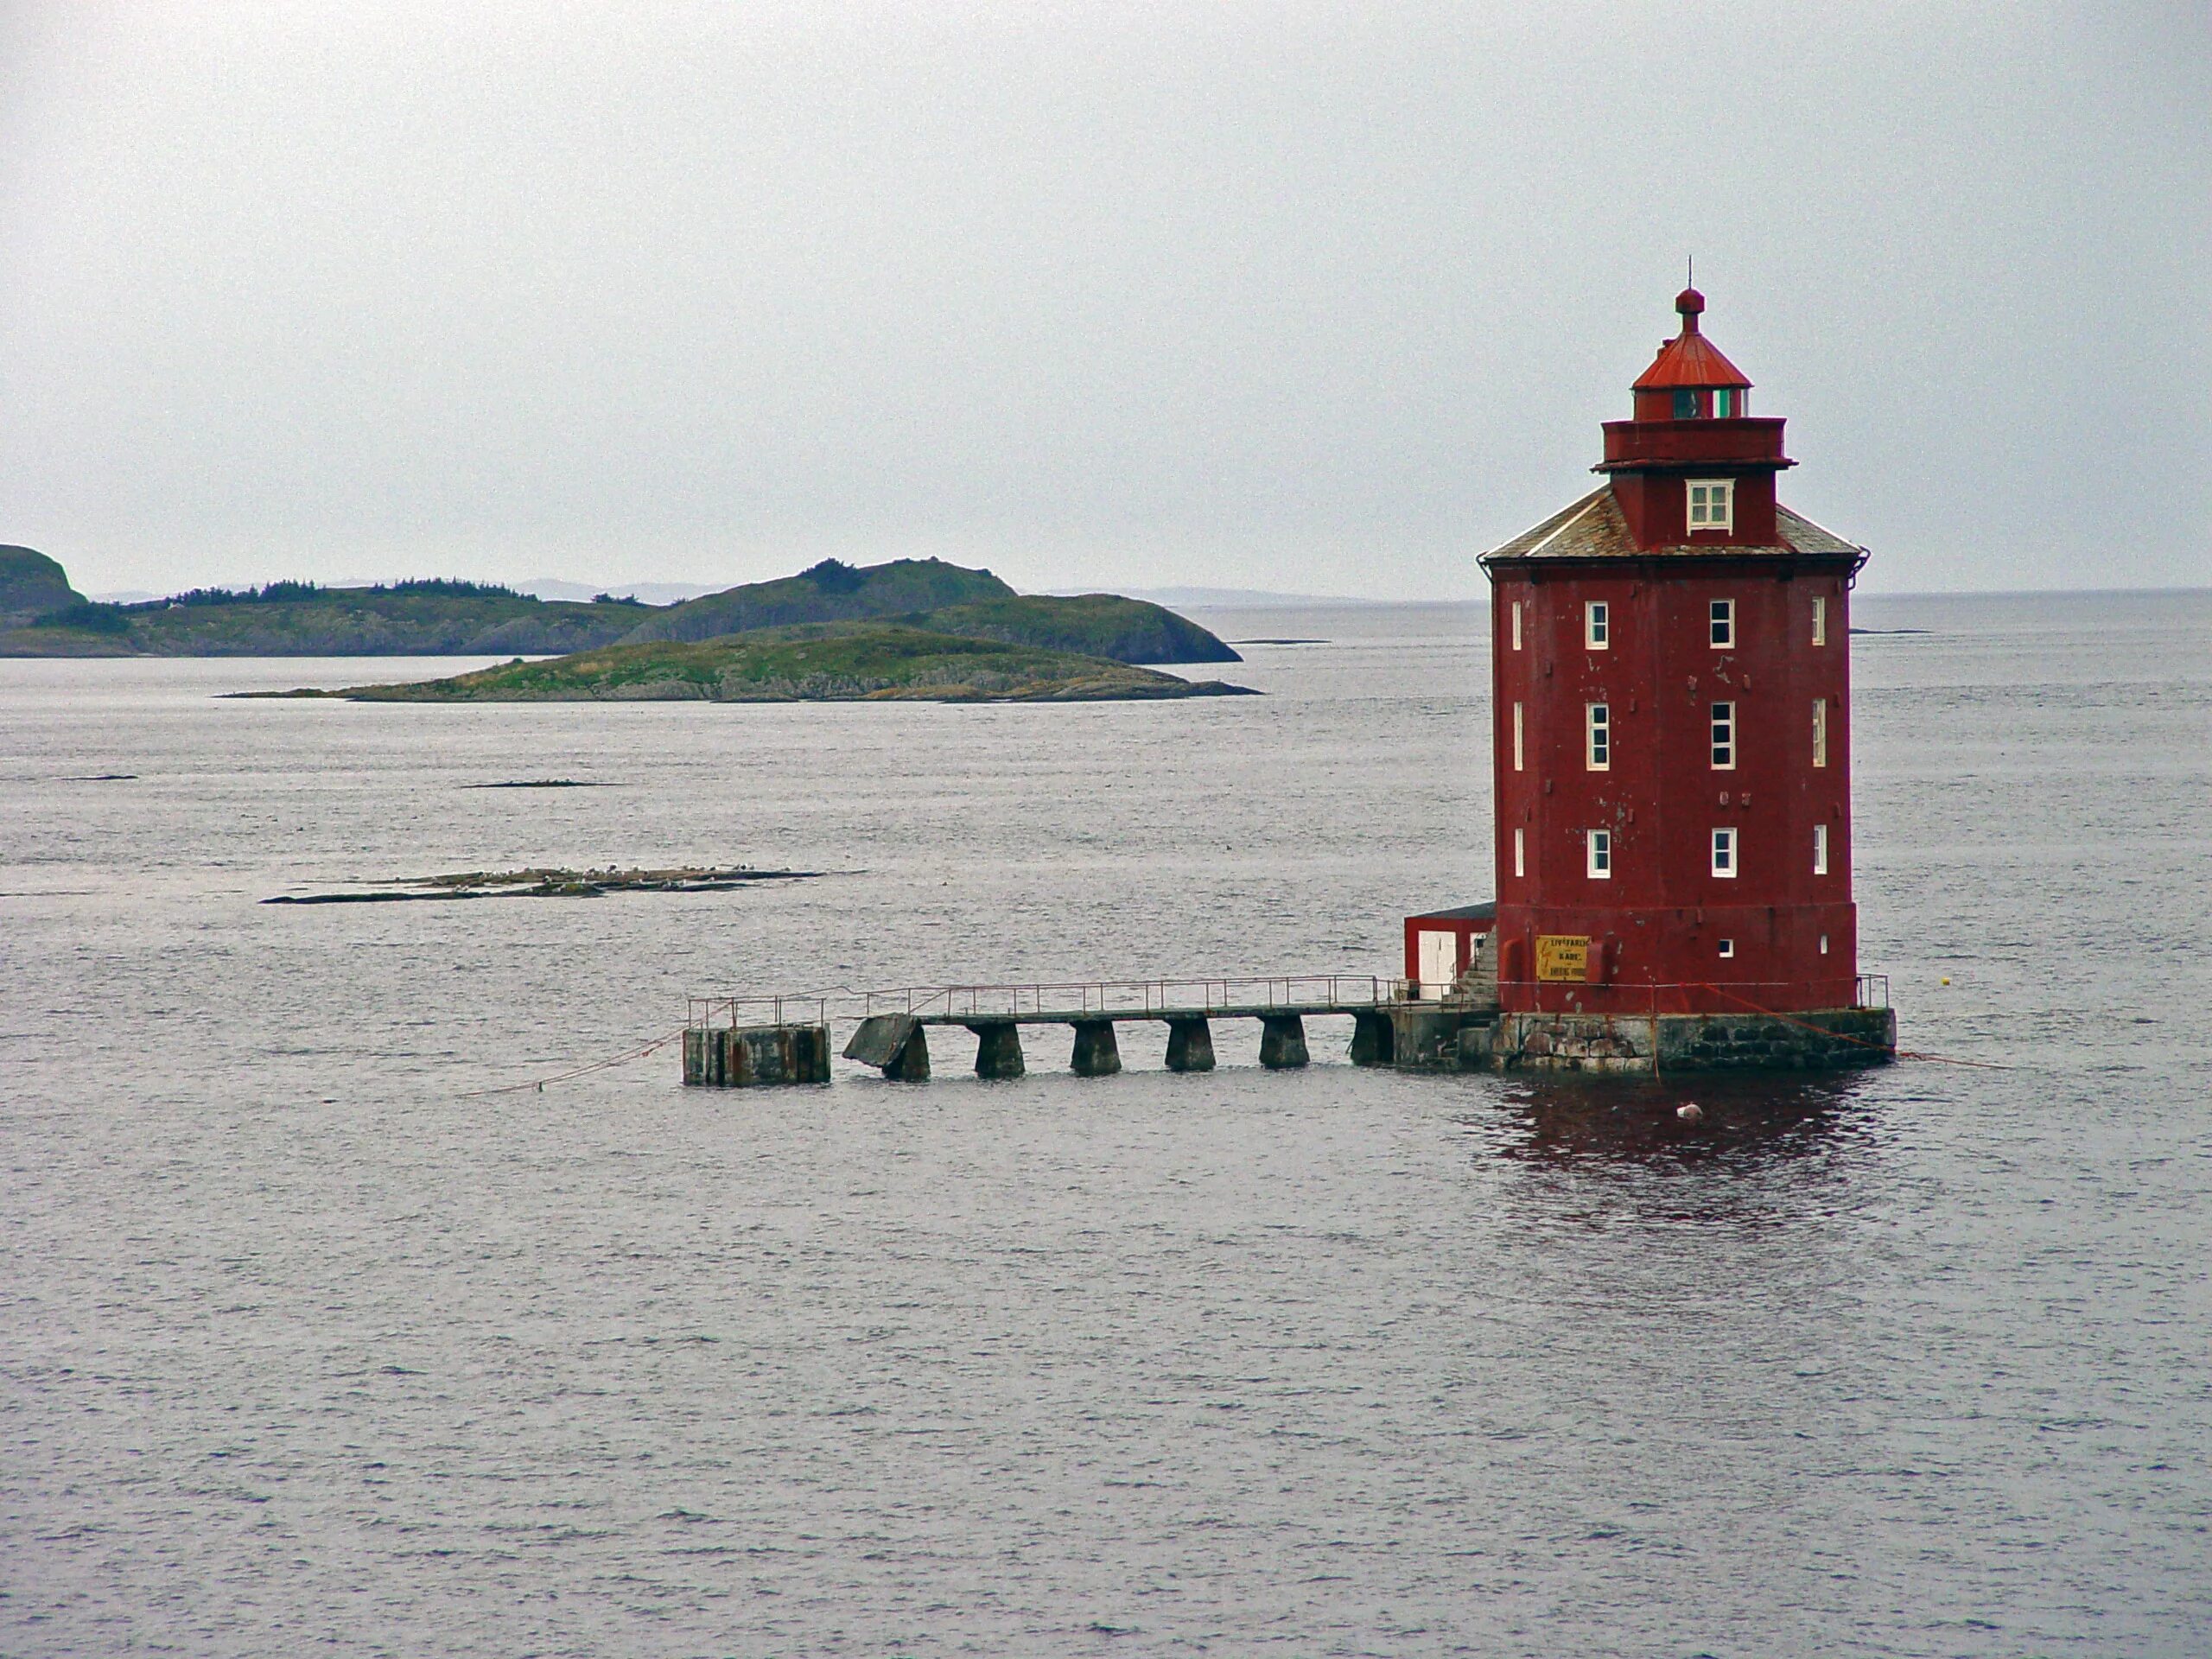 Береговой маяк. Kjeungskjær Lighthouse, Норвегия. Маяк Бюссе. Kjeungskjaer Lighthouse Маяк. Маяк Брюса Славянка.